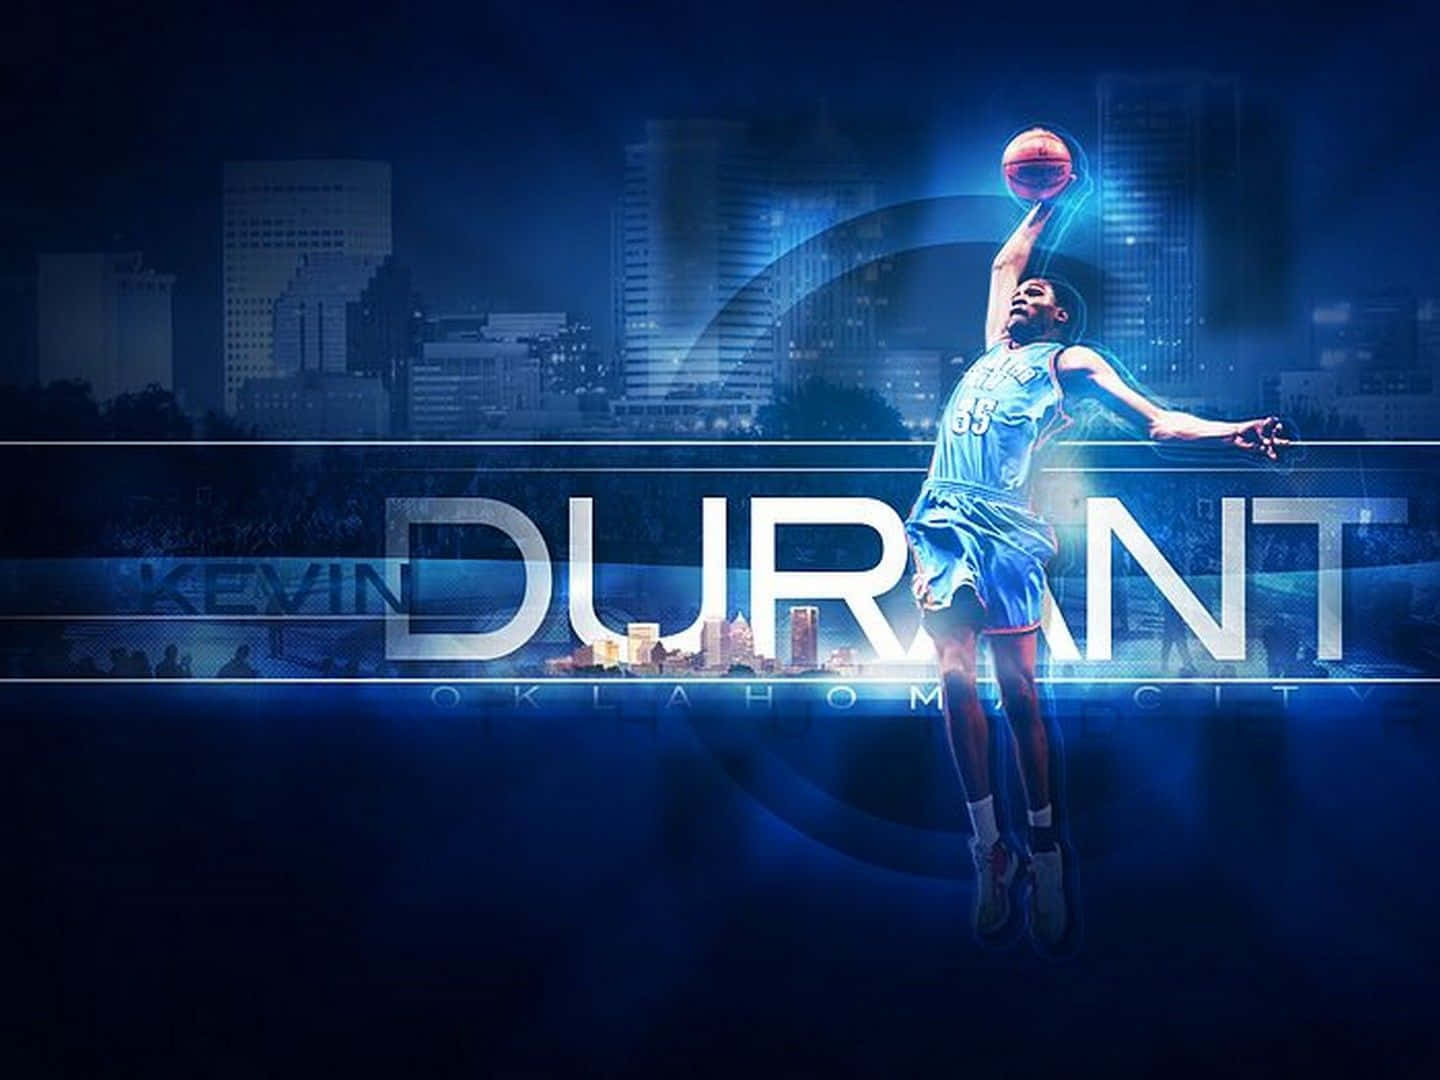 Blue Basketball Kevin Durant Fanart Wallpaper